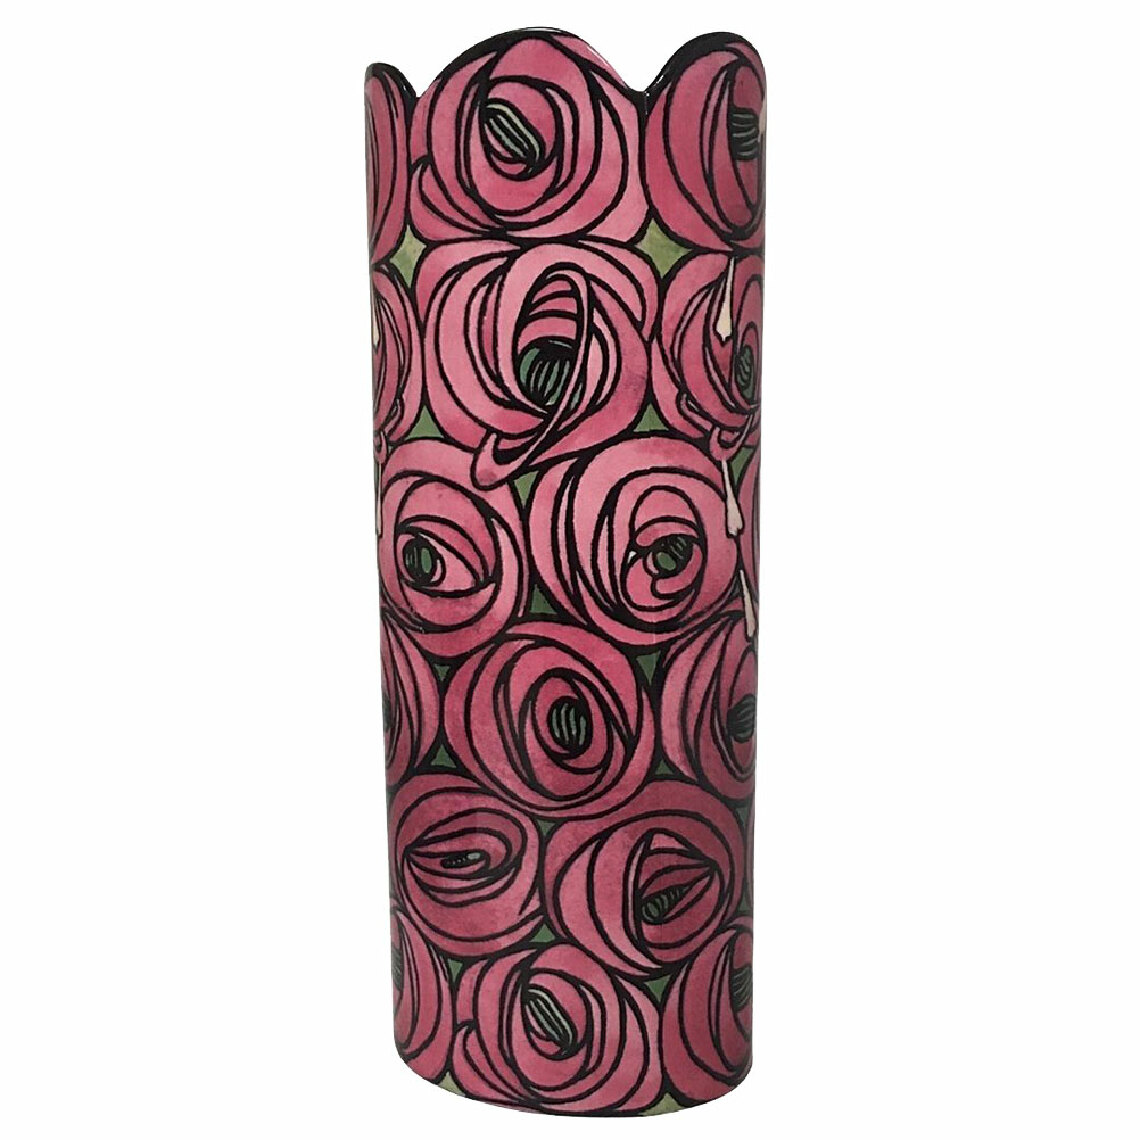 Parastone - Vase en céramique silhouette Charles Rennie Mackintosh - Rose - Vases